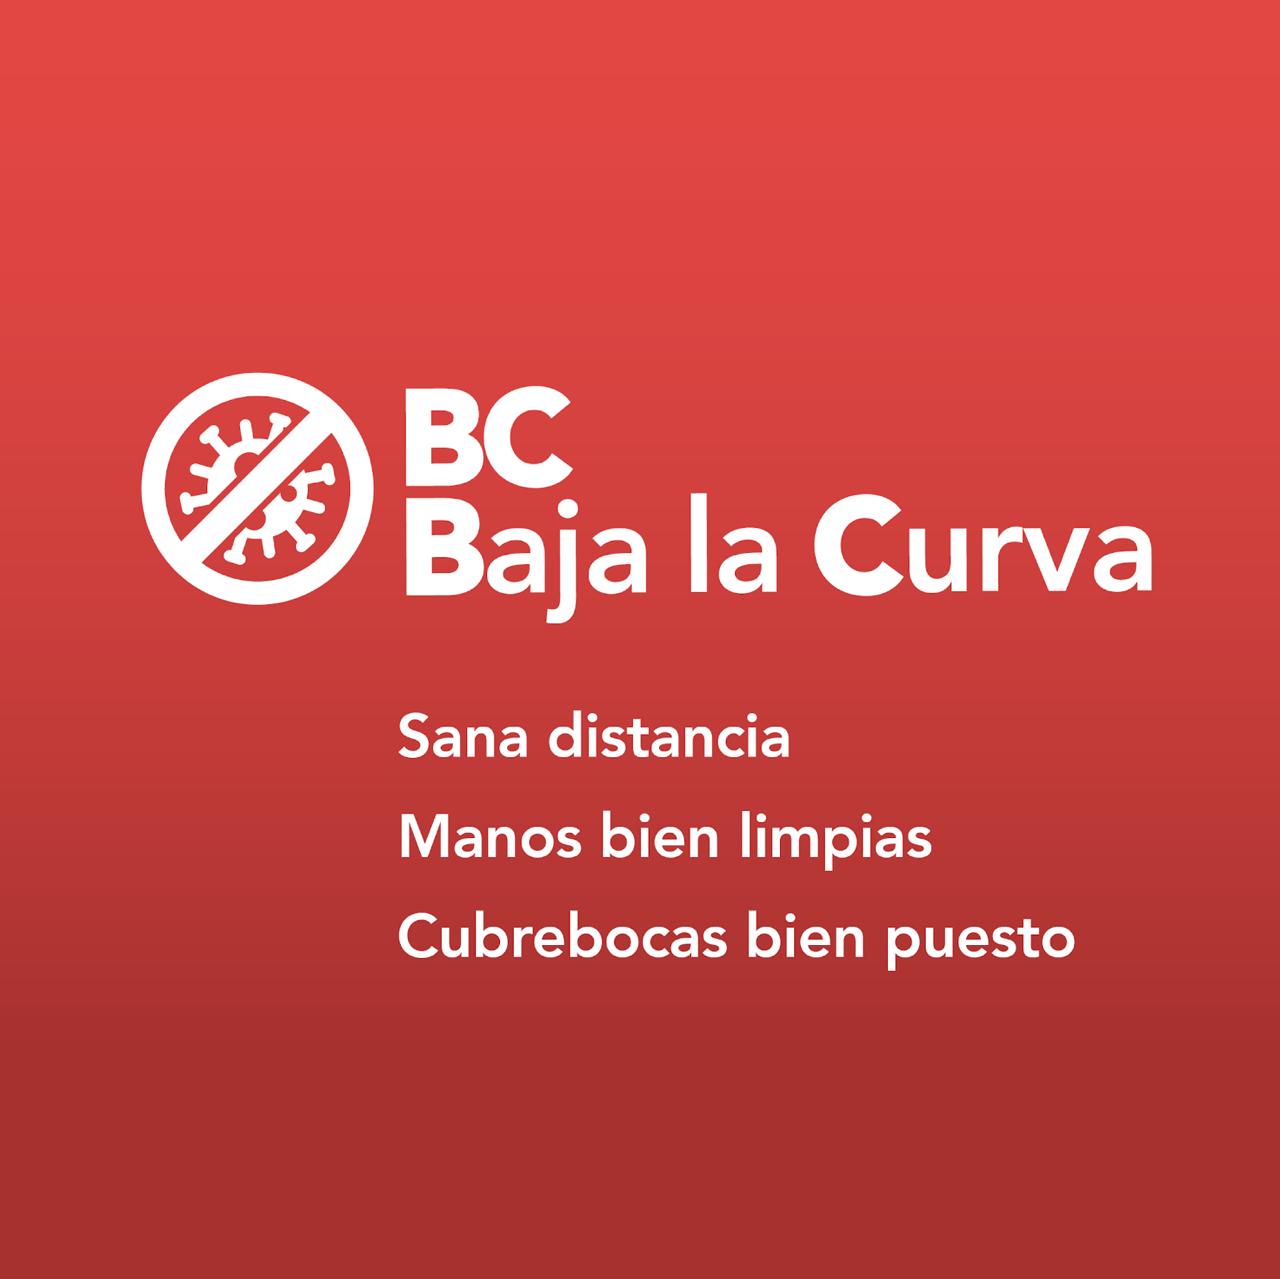 CAMPAÑA BC BAJA LA CURVA, Consejo de Desarrollo de Tijuana